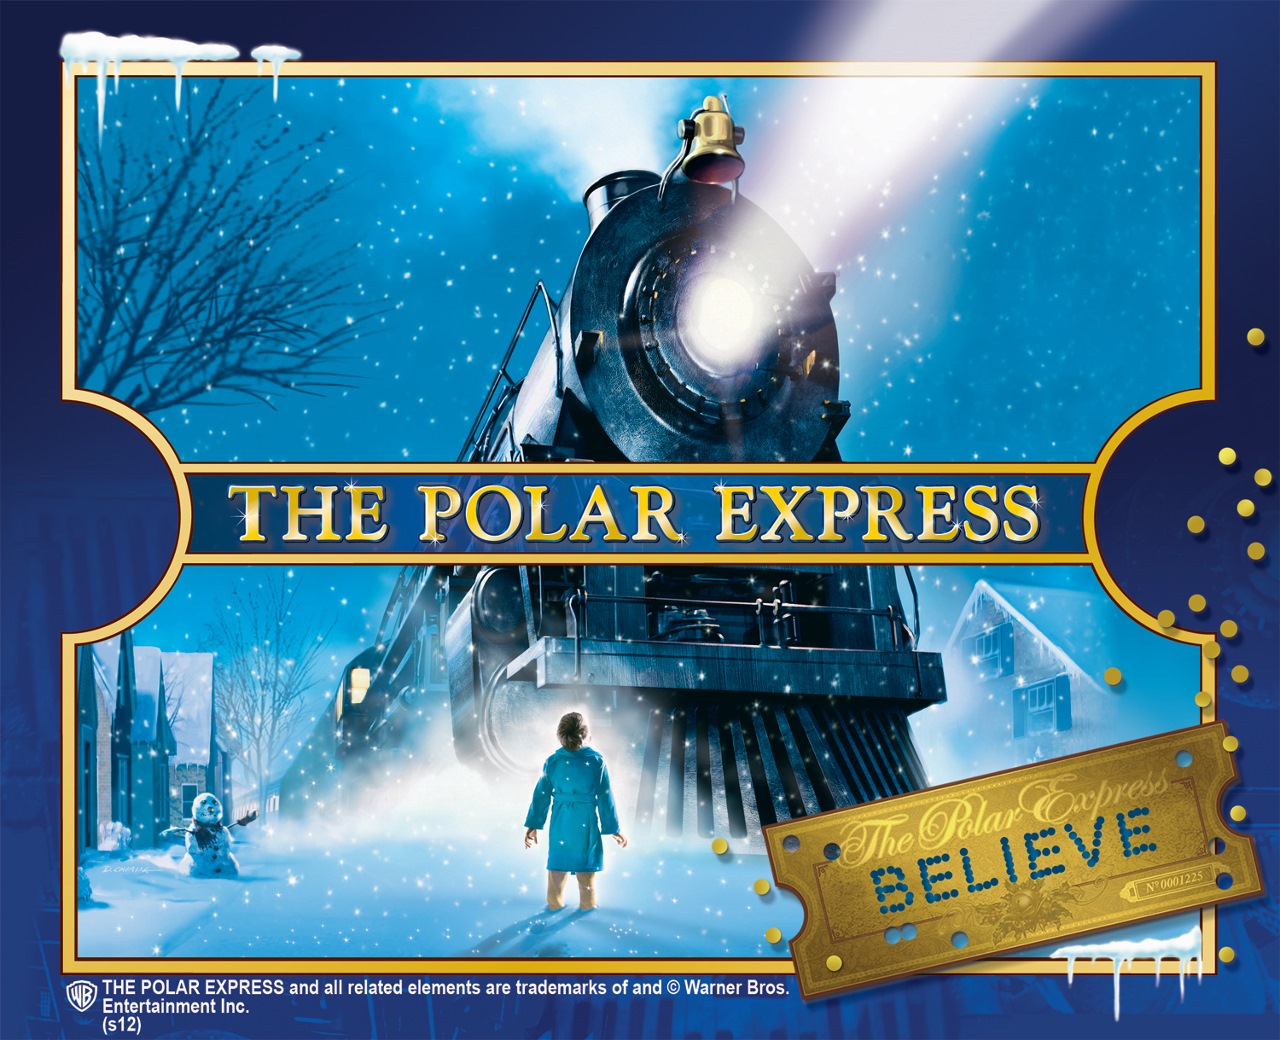 The Polar Express coming this Christmas.